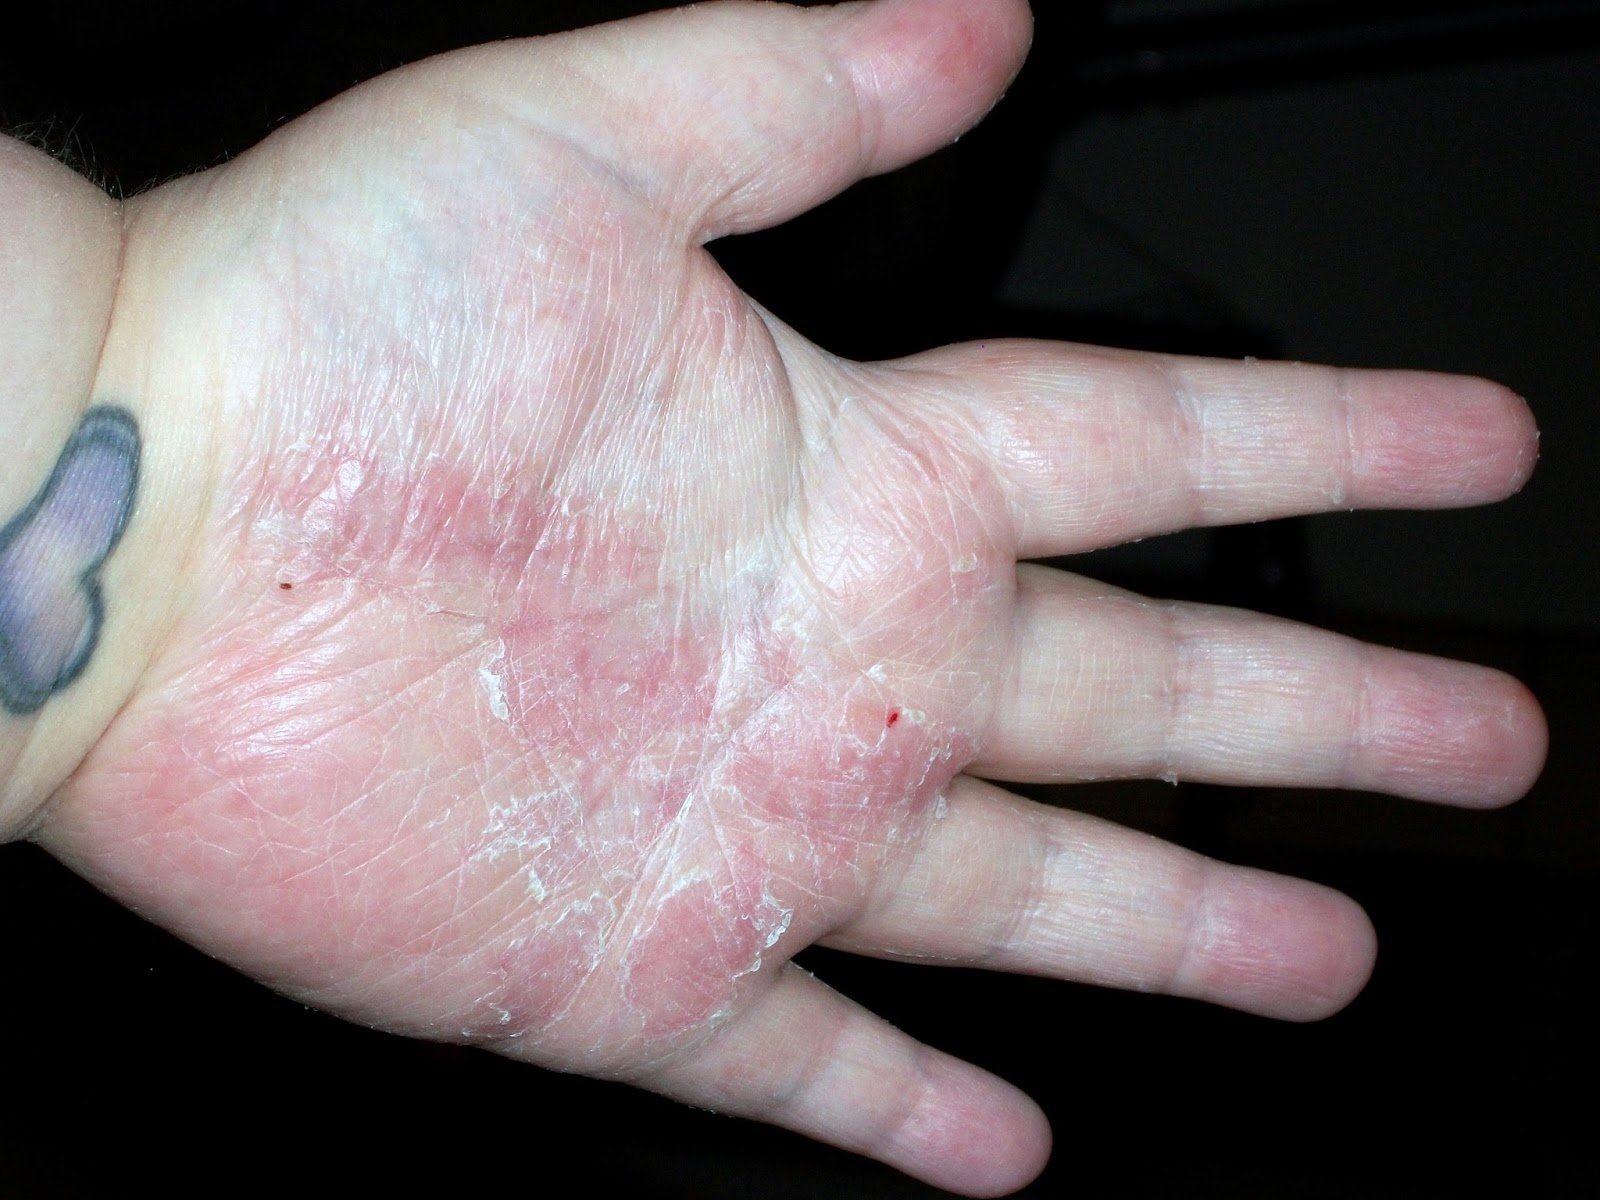 psoriasis on hands